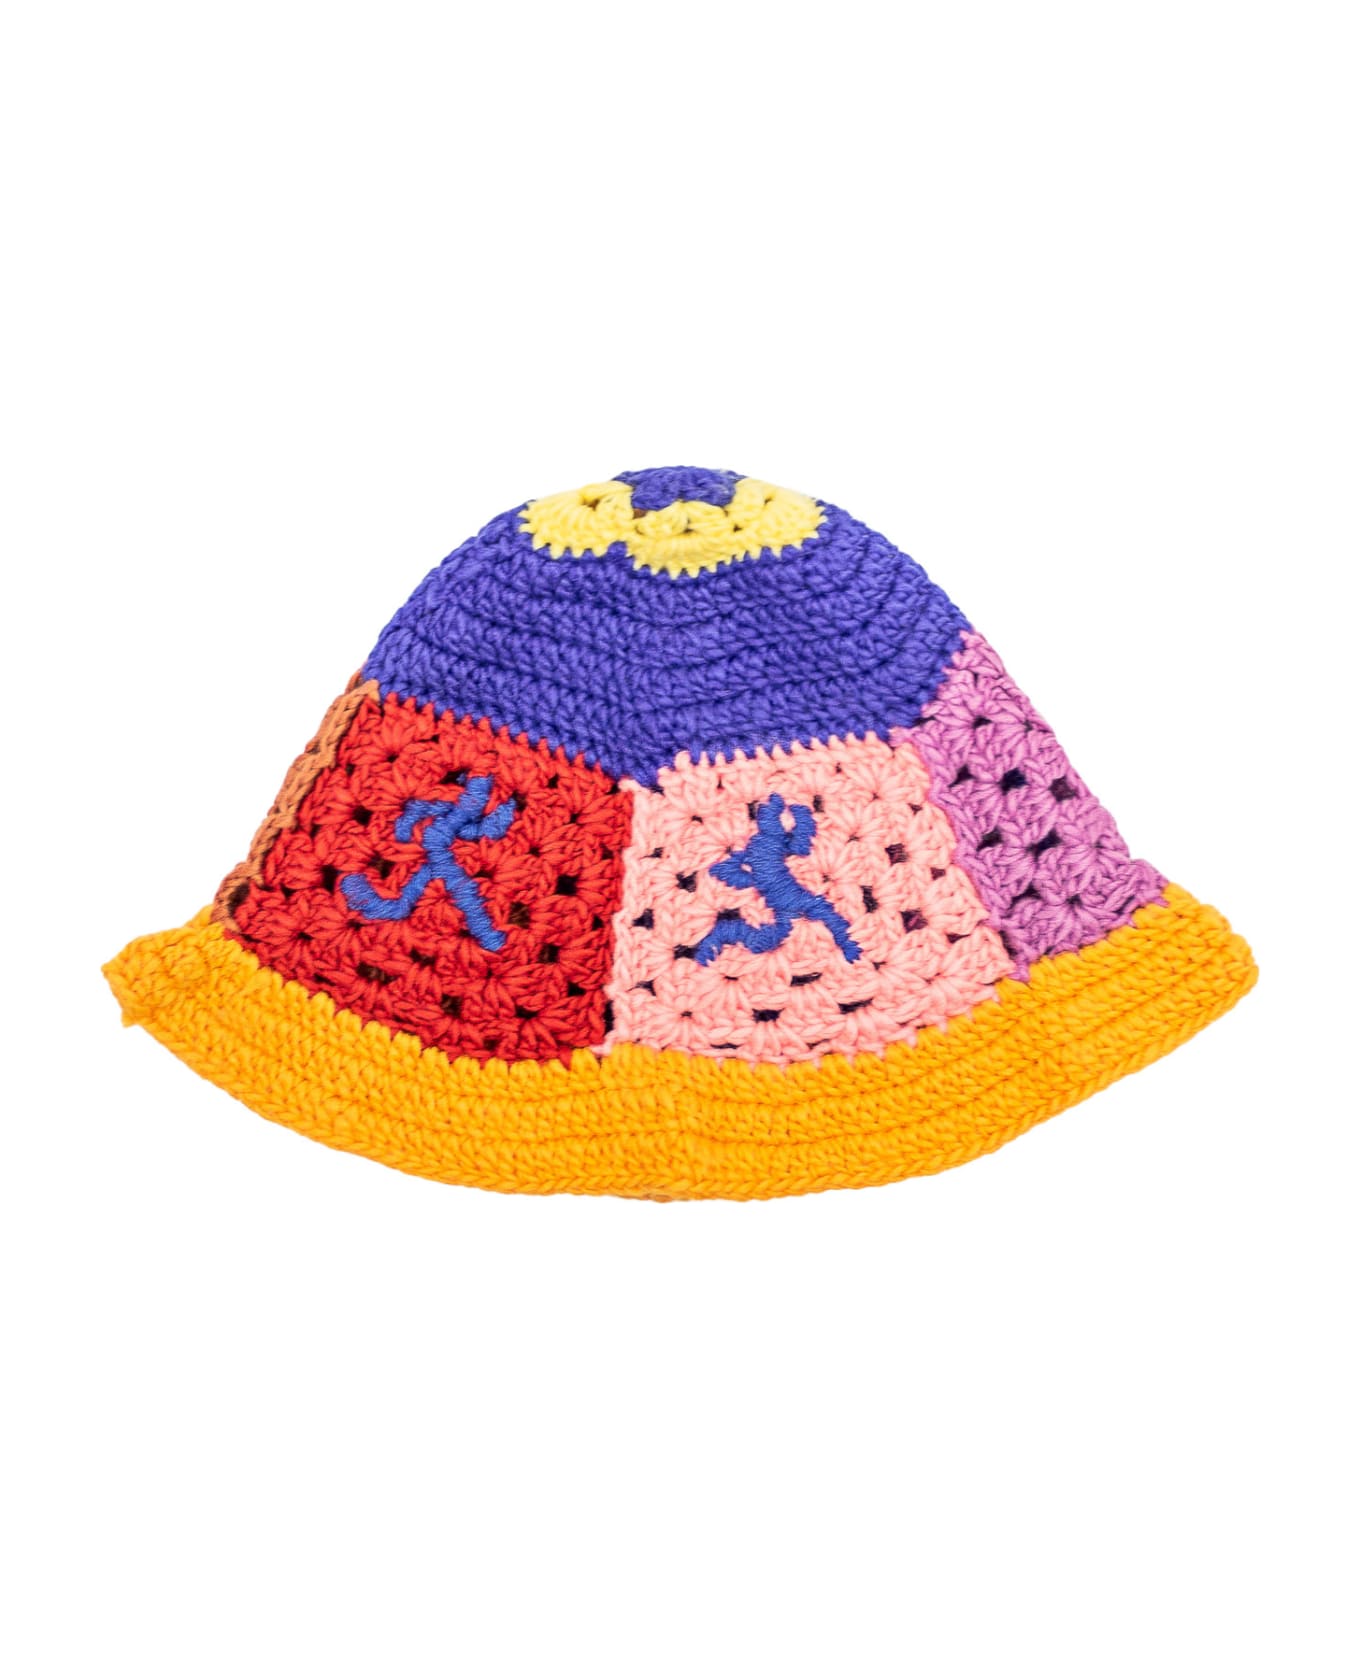 Kidsuper Crochet Hat - MULTI 帽子